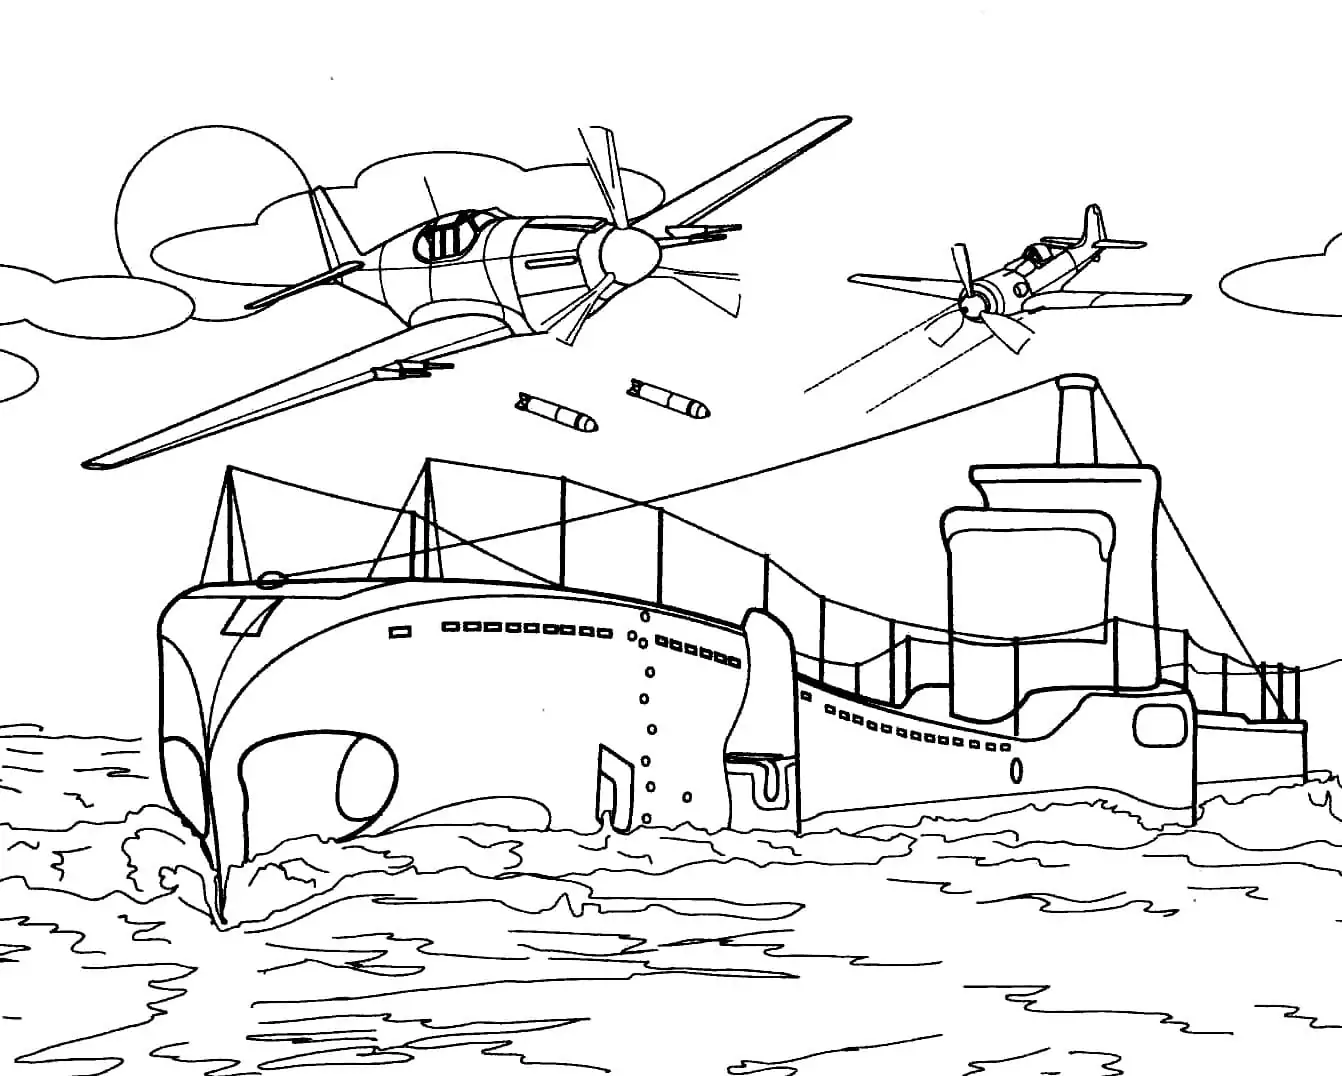 Flugzeuge greifen U-Boot an